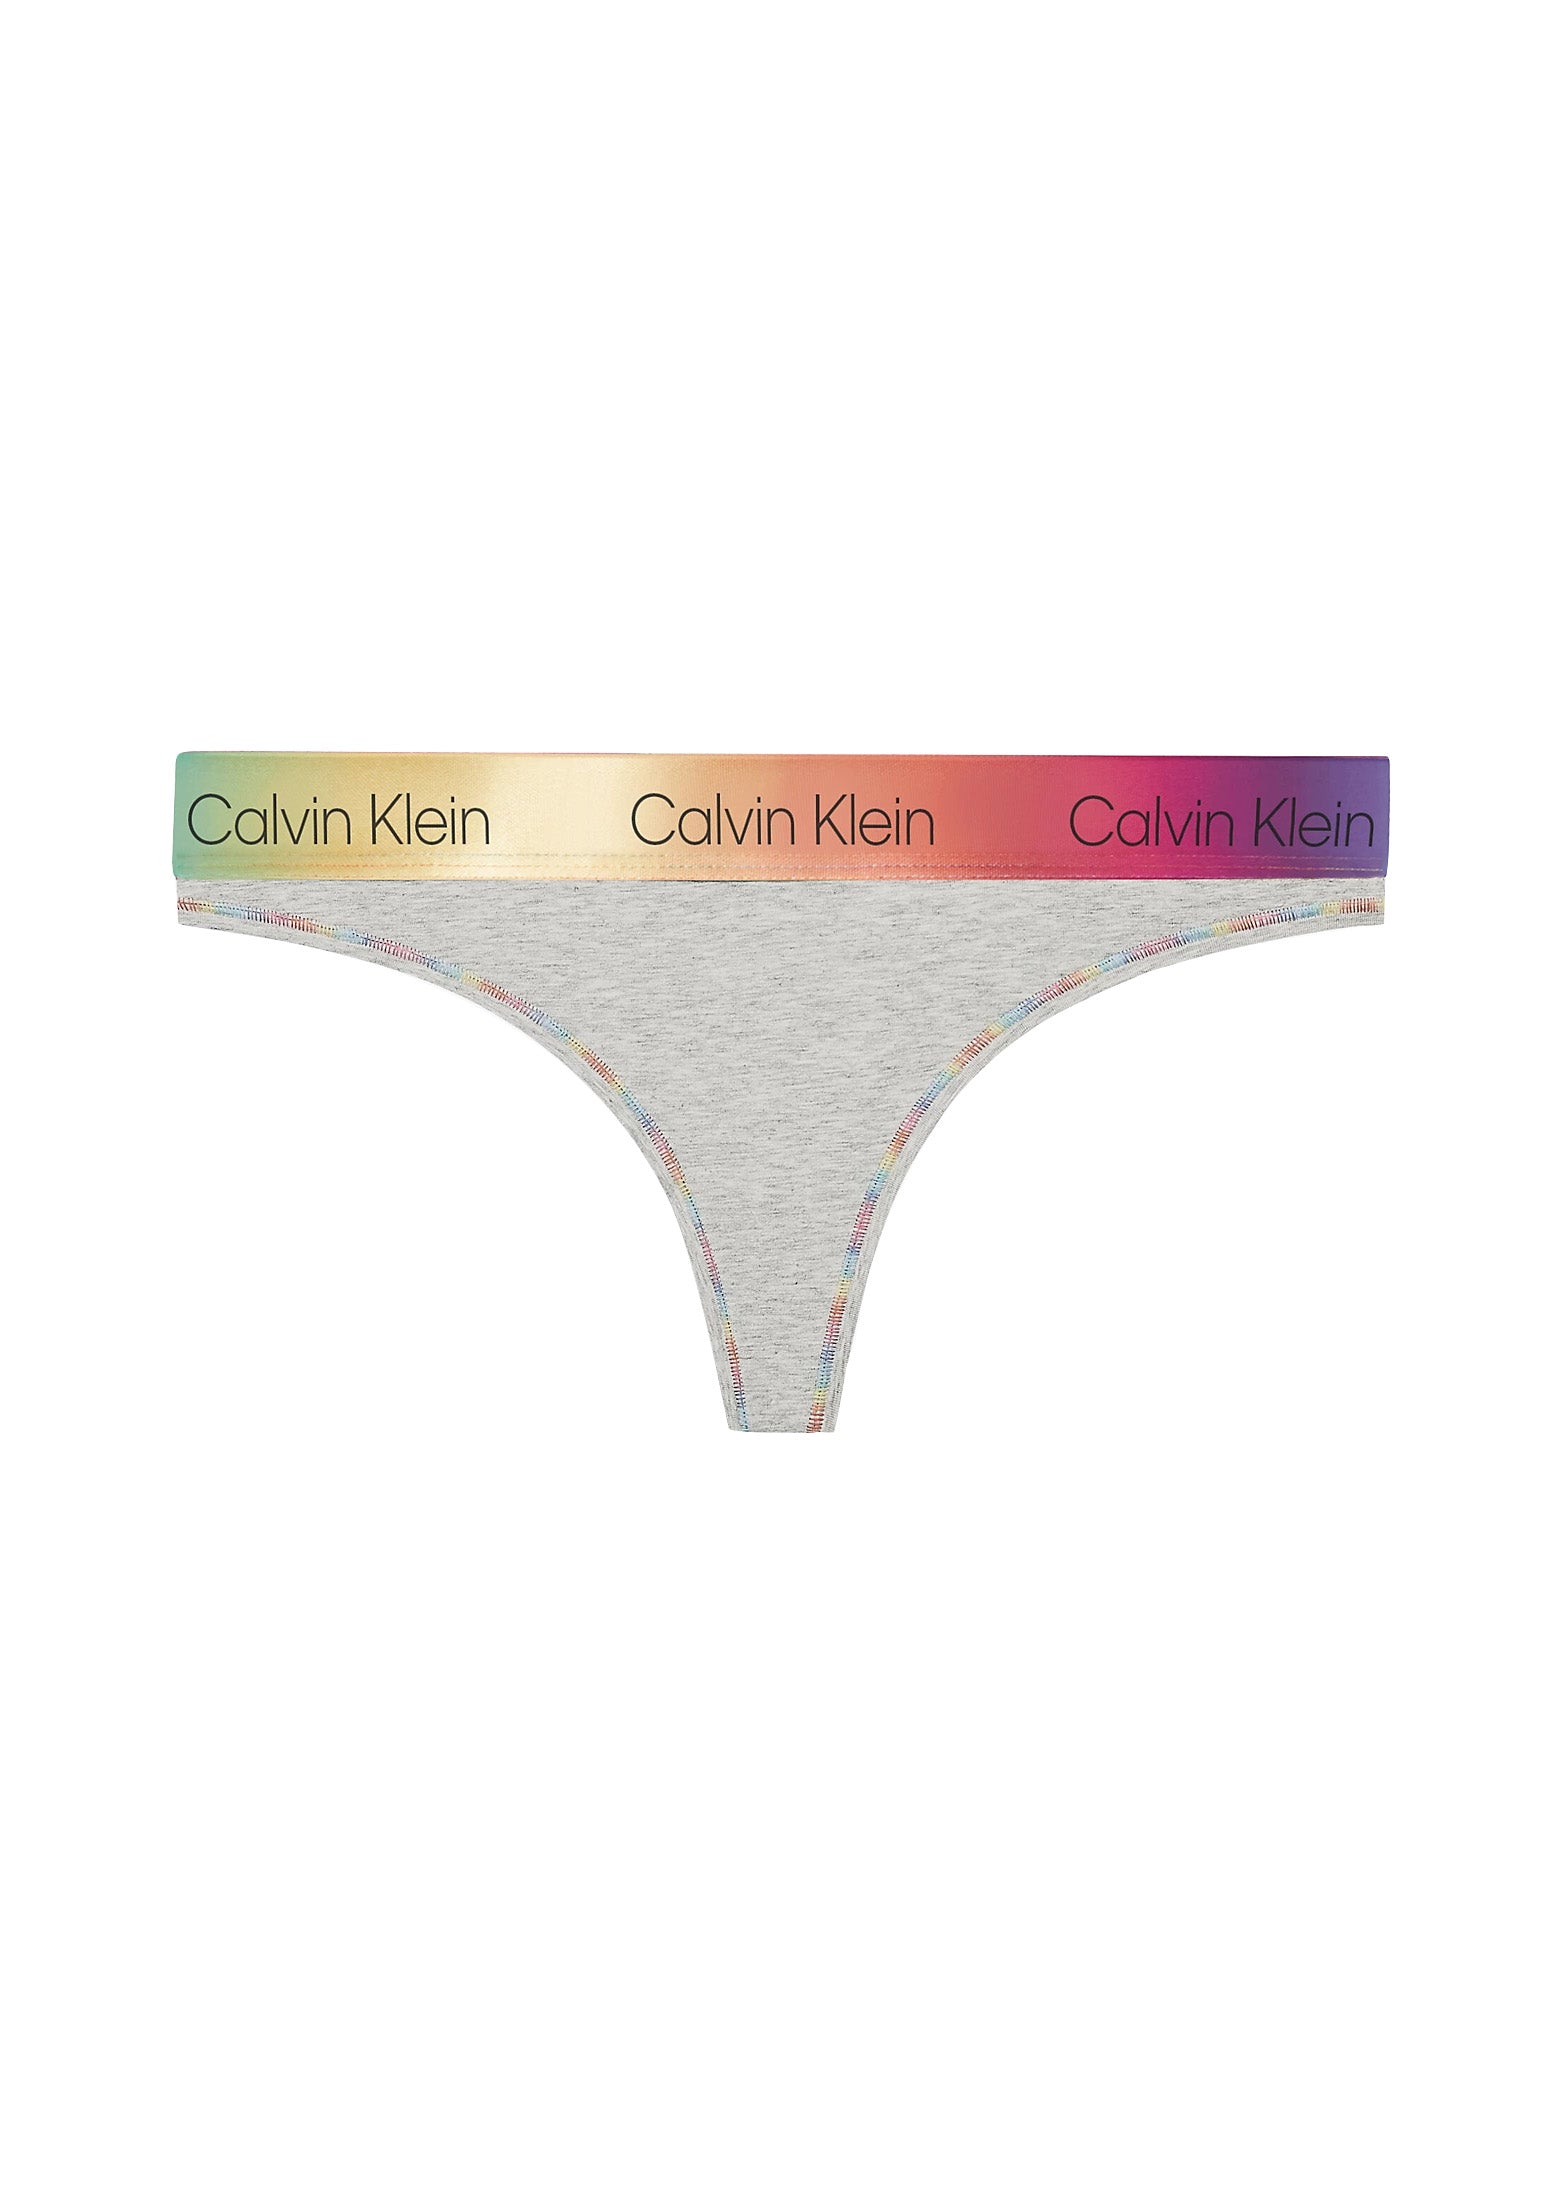 CALVIN KLEIN Modern Cotton Thong - CHARCOAL